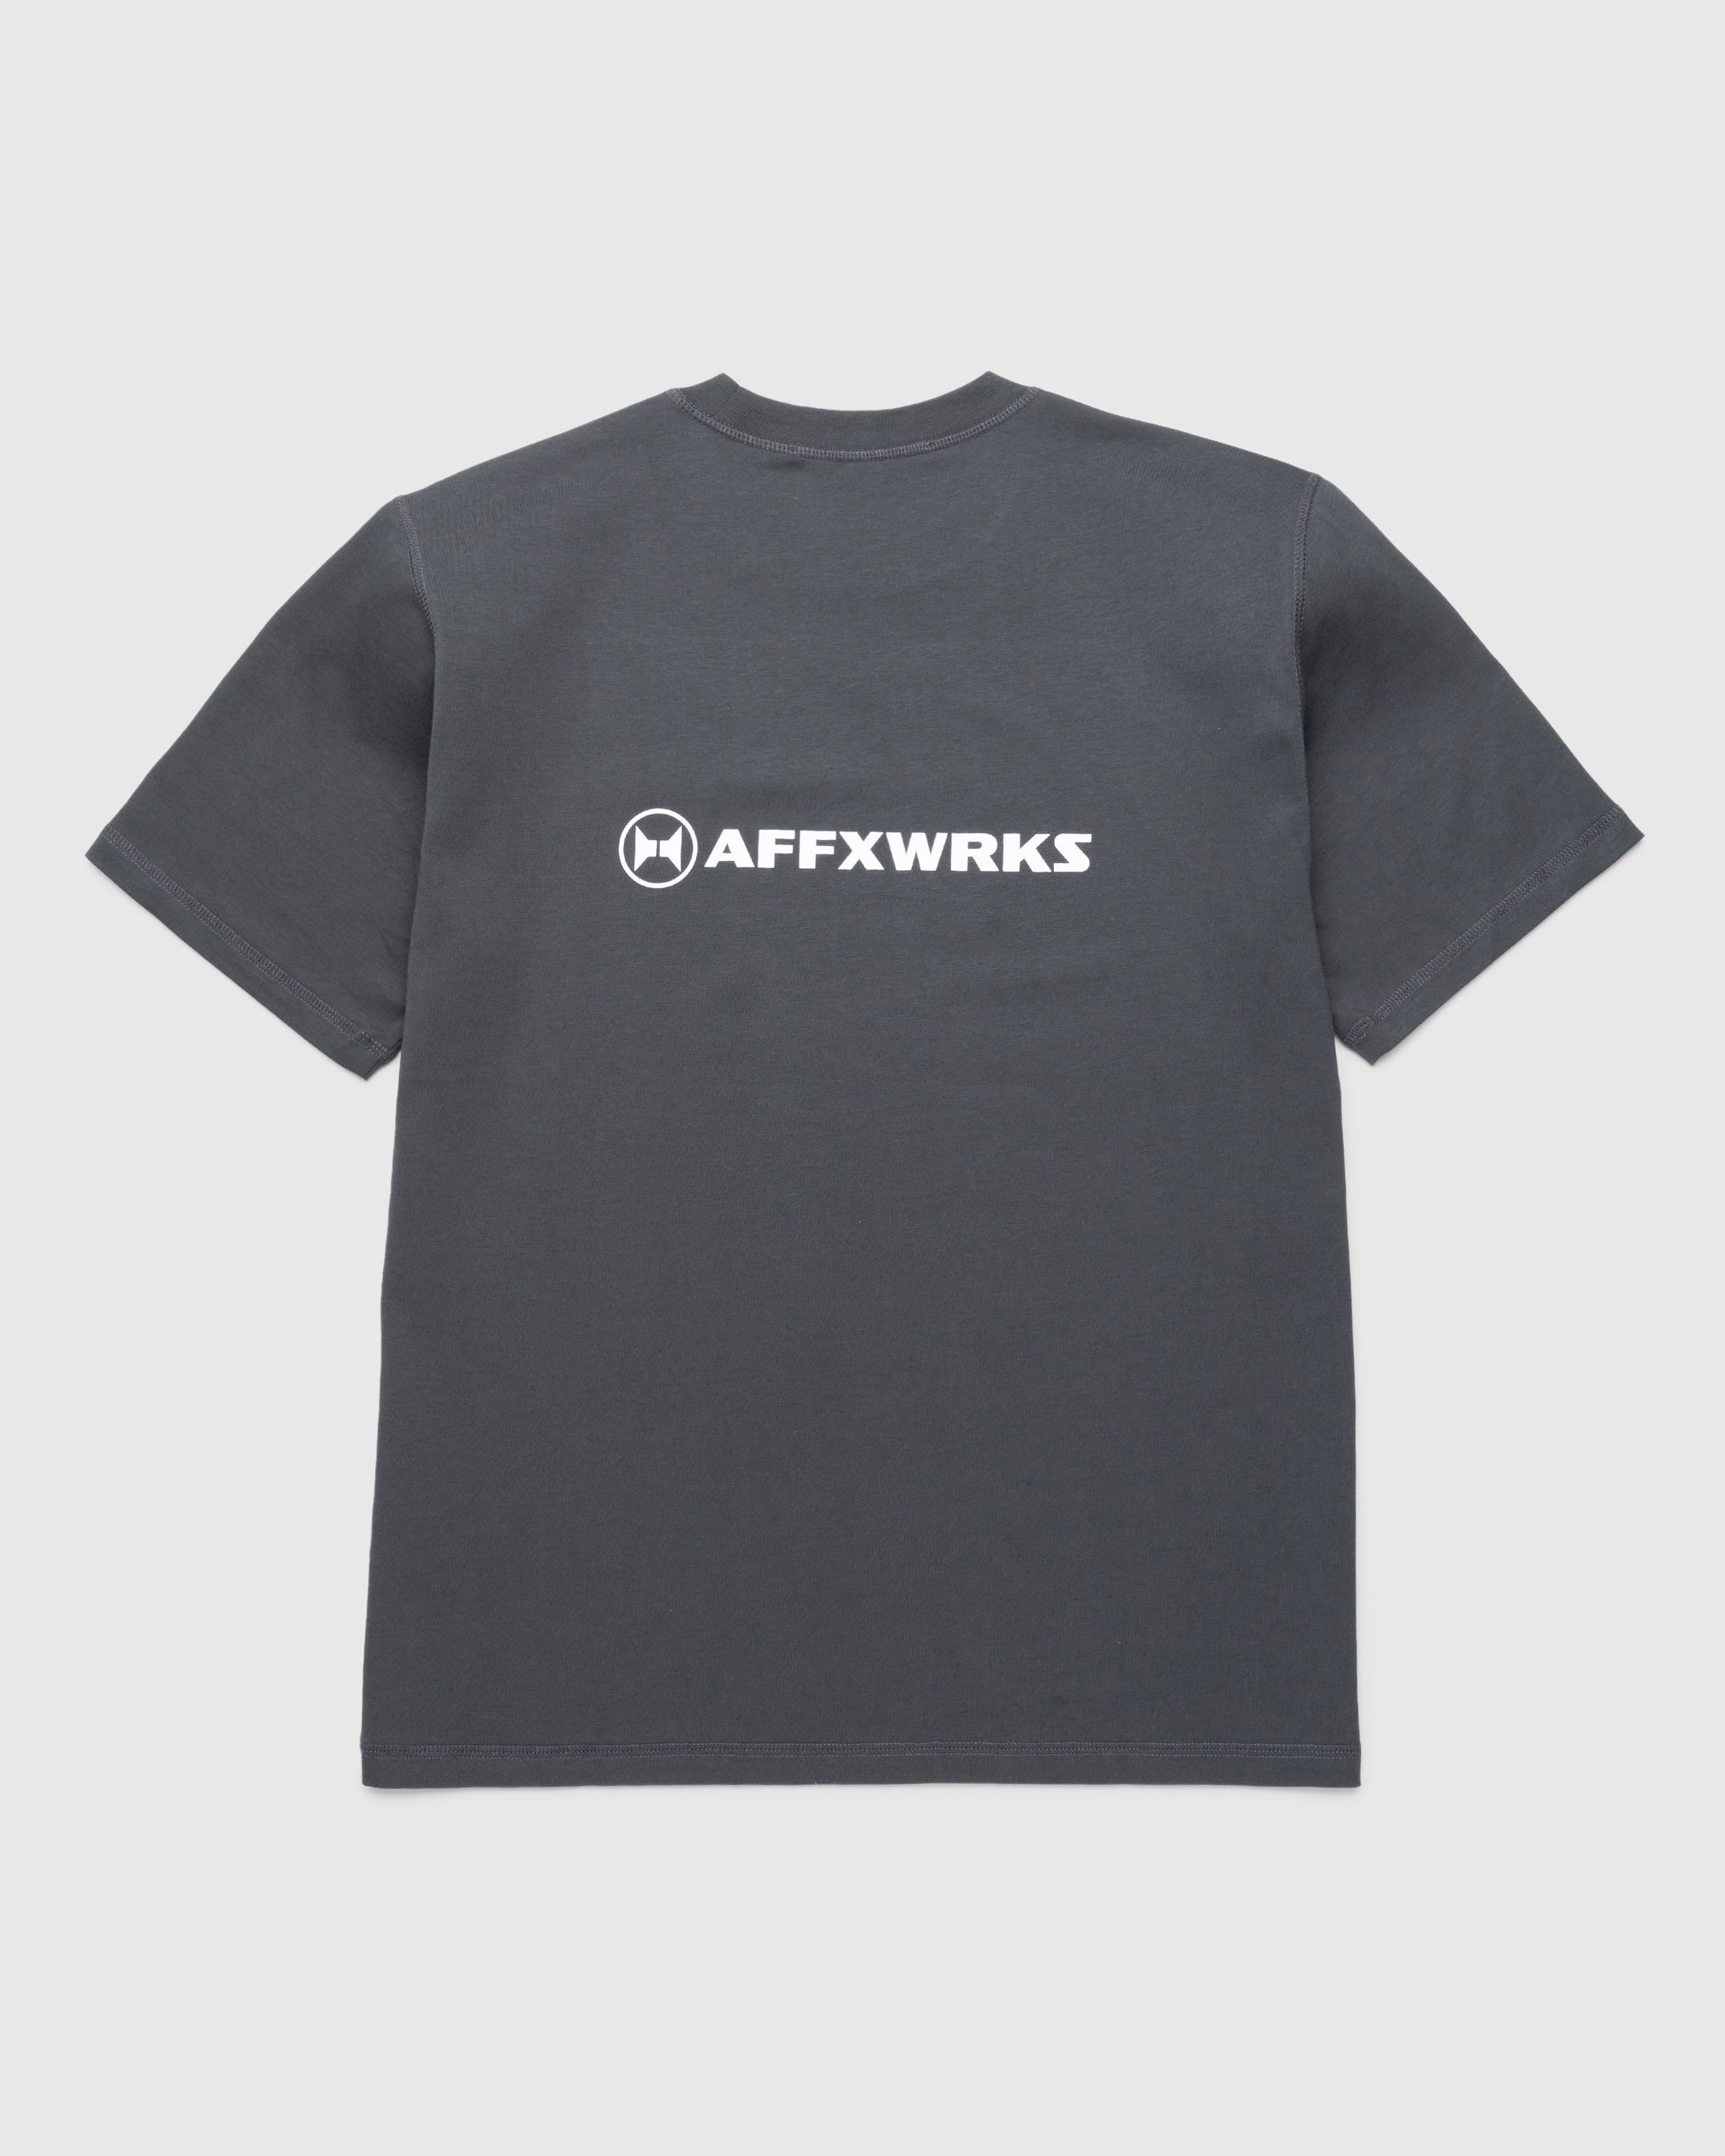 AFFXWRKS – AFFXWRKS T-SHIRT | Highsnobiety Shop